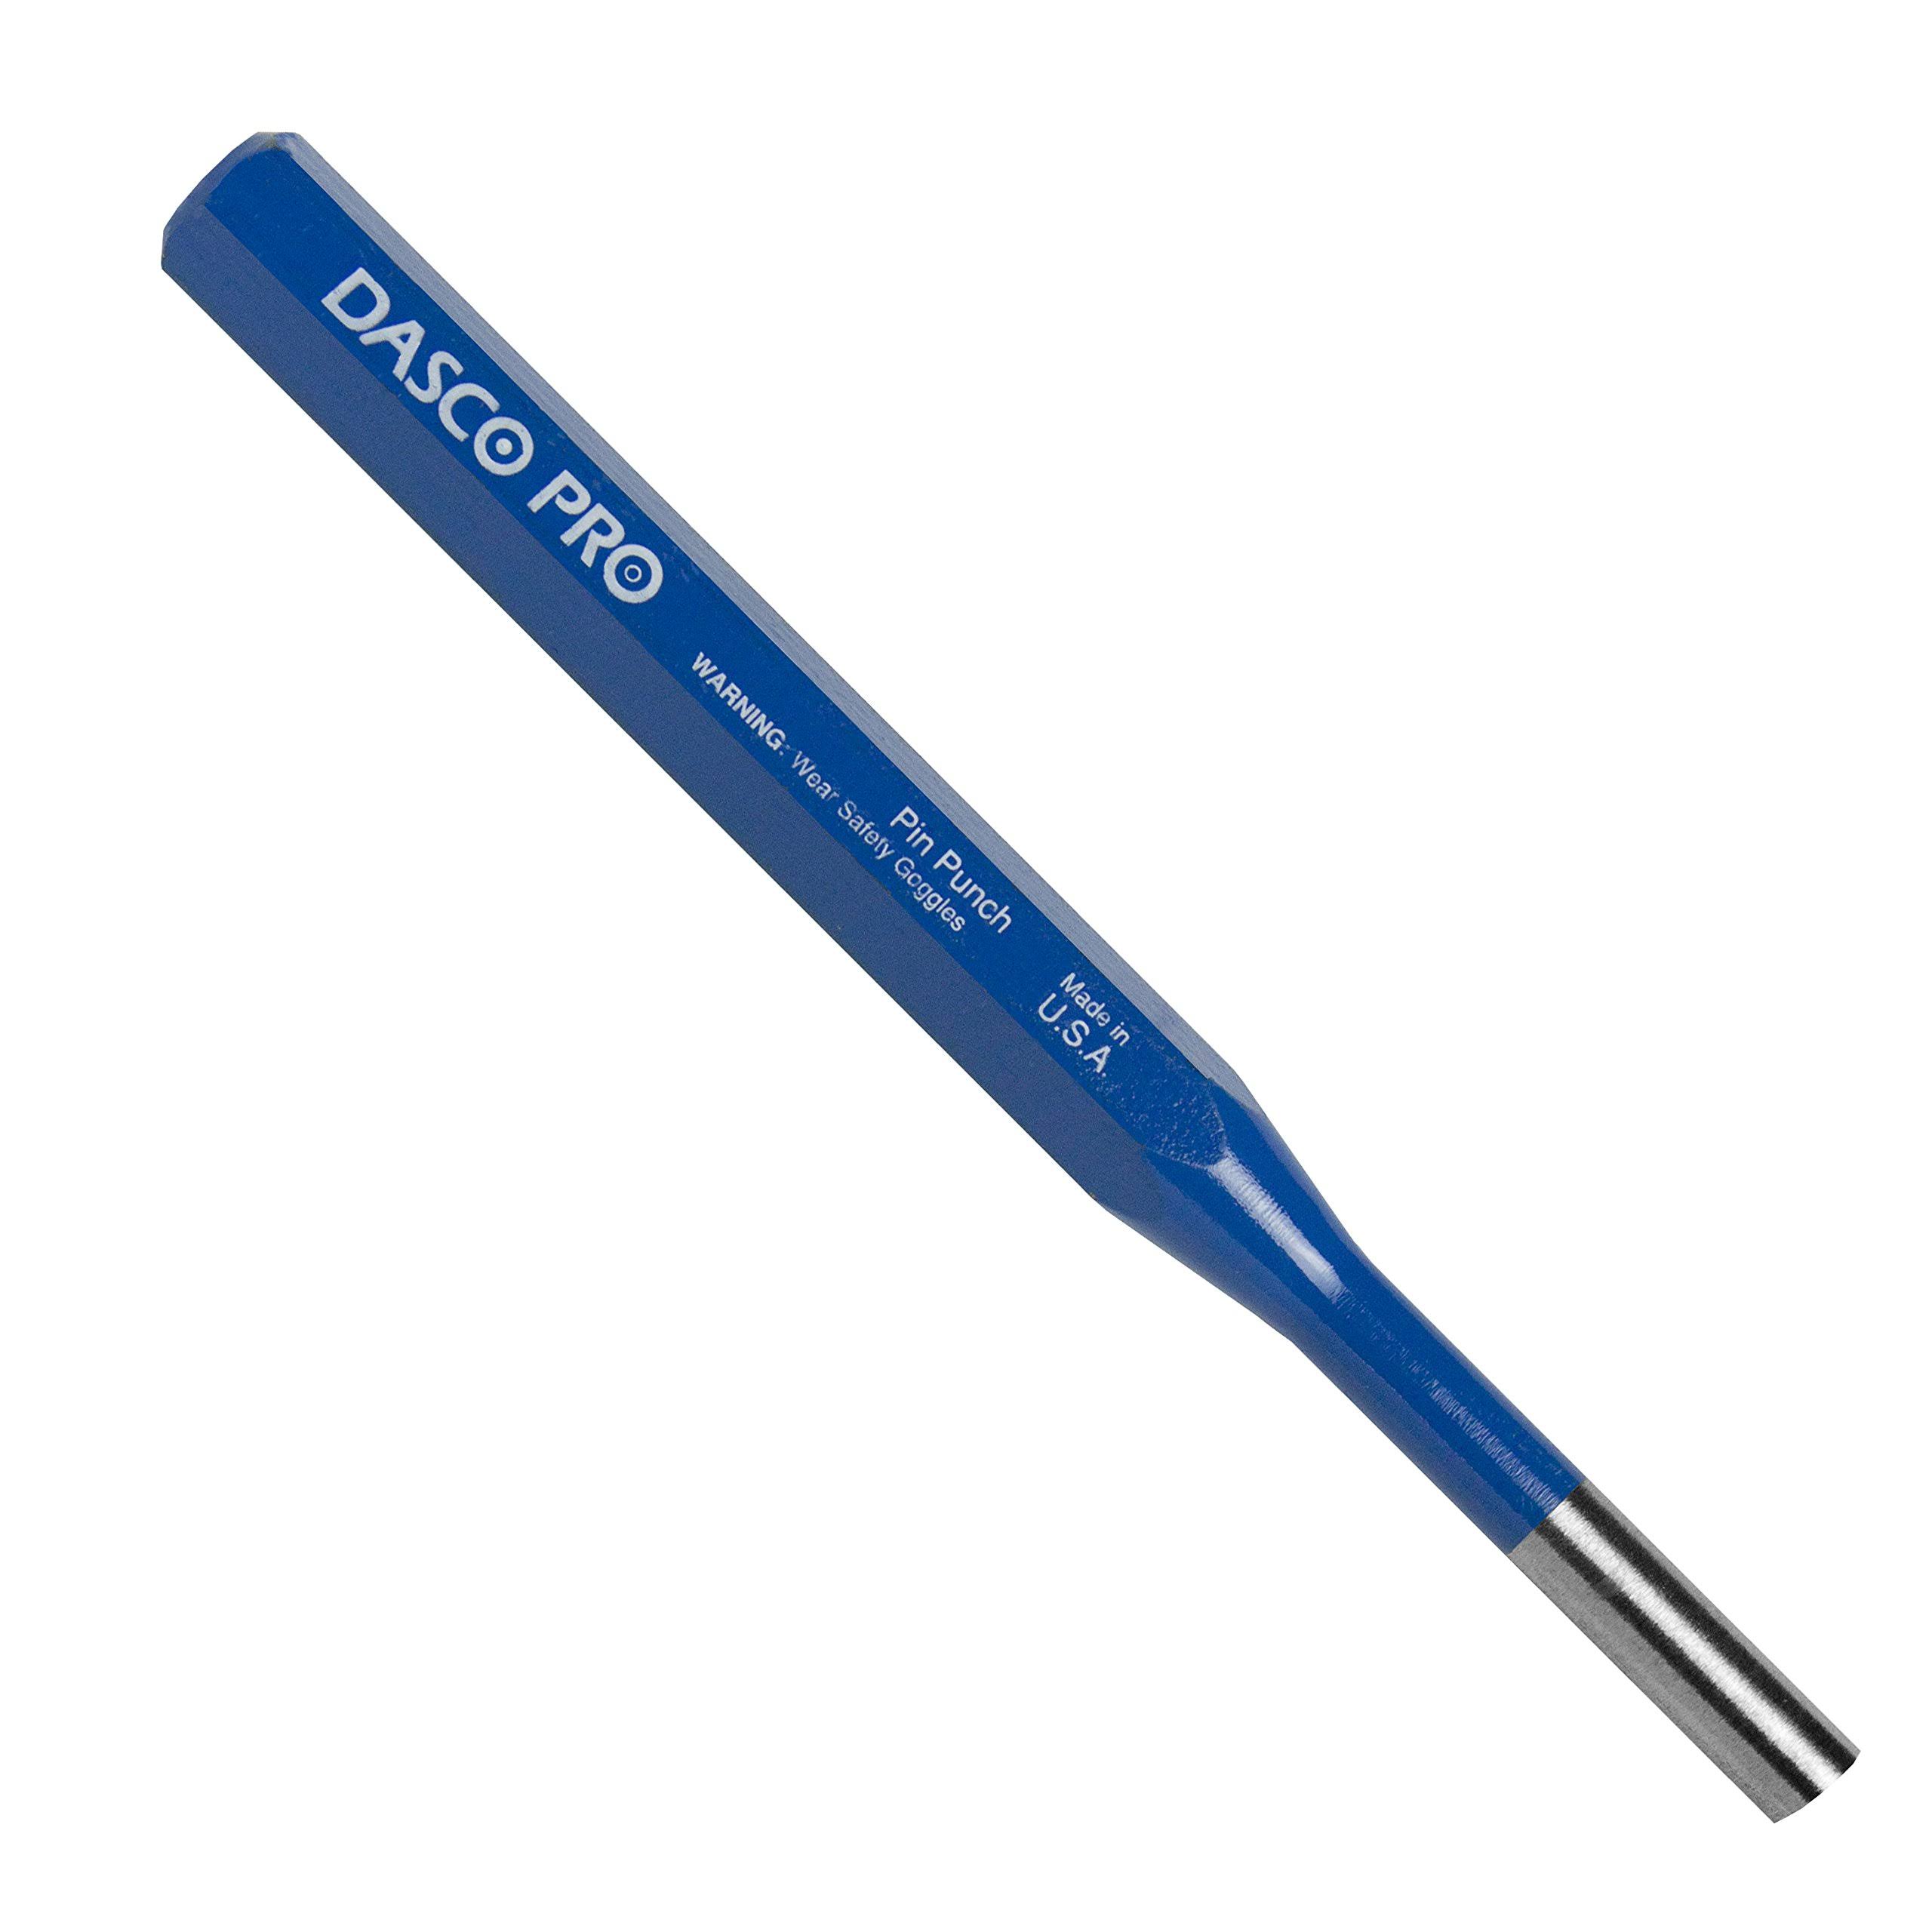 Dasco Pro 582-0 High Carbon Steel Pin Punch - 1/8" x 5-1/2"